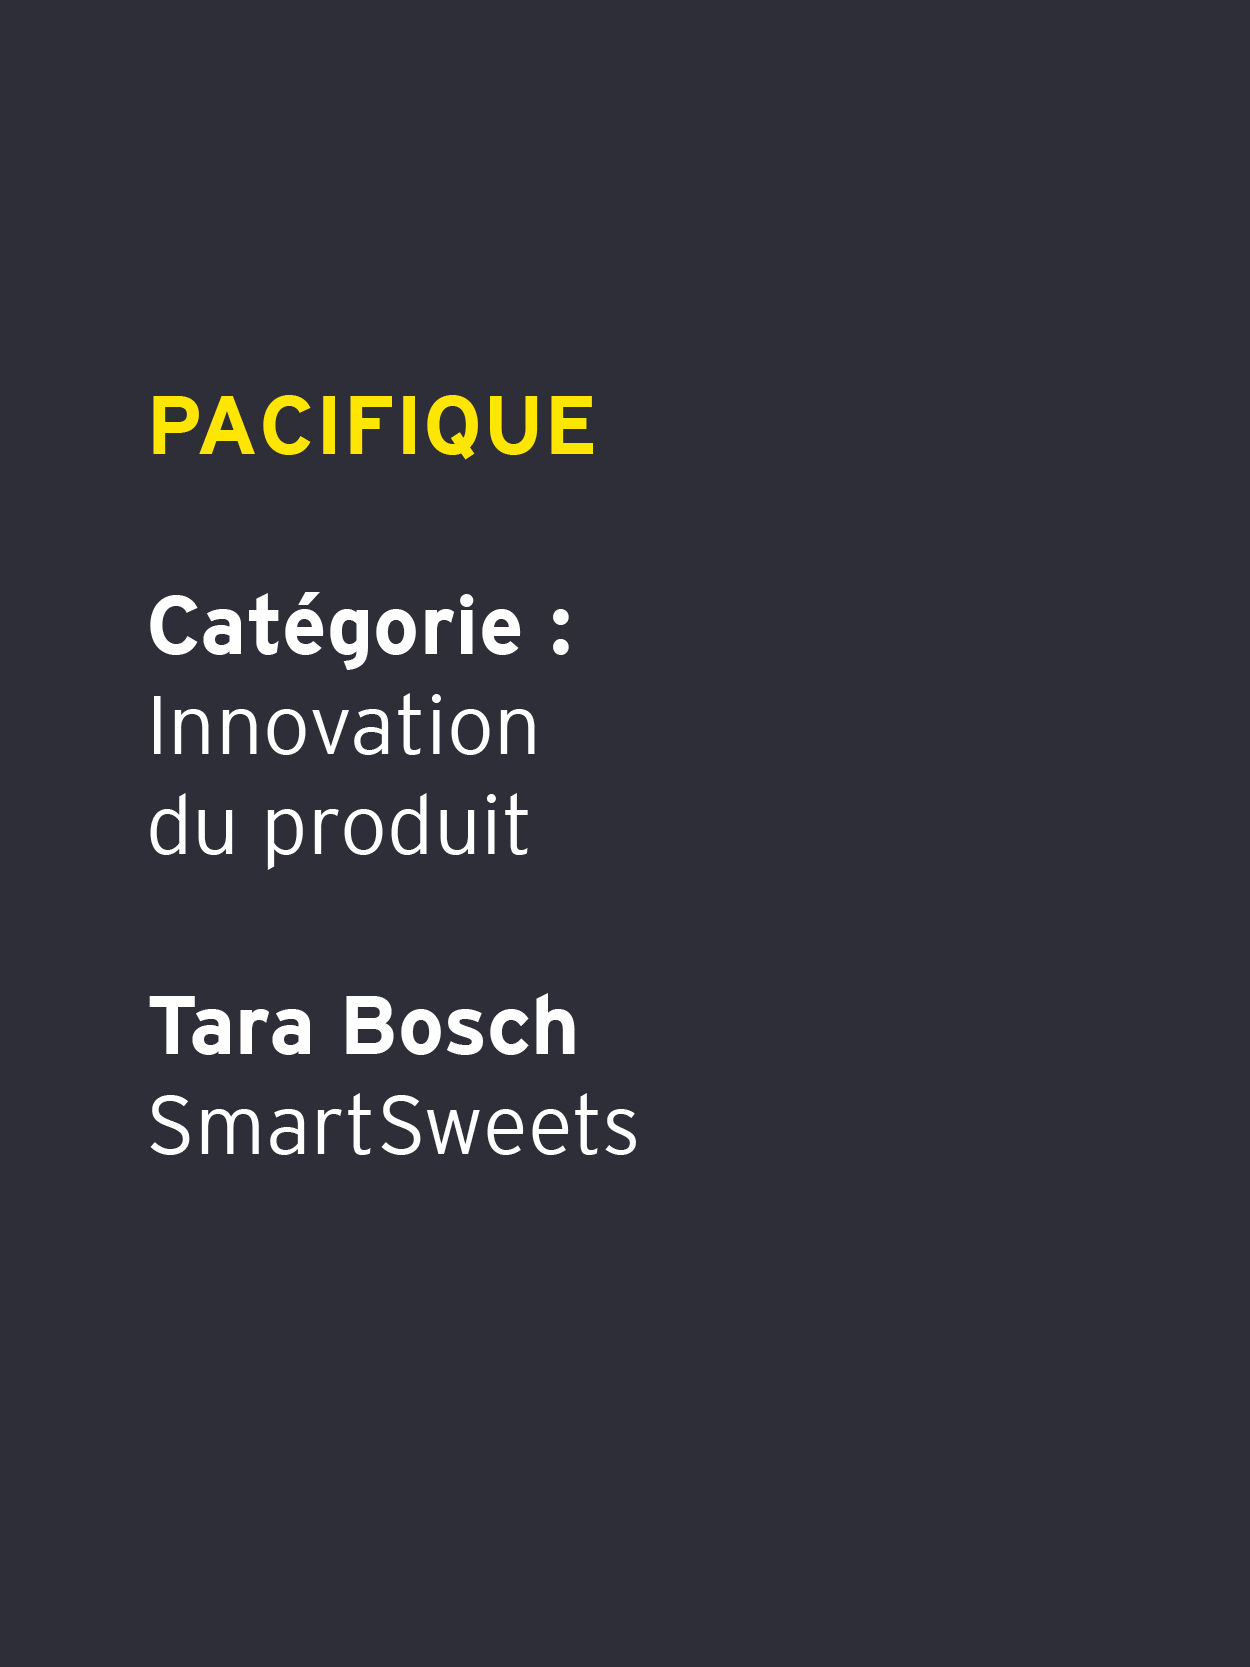             Tara Bosch – SmartSweets         